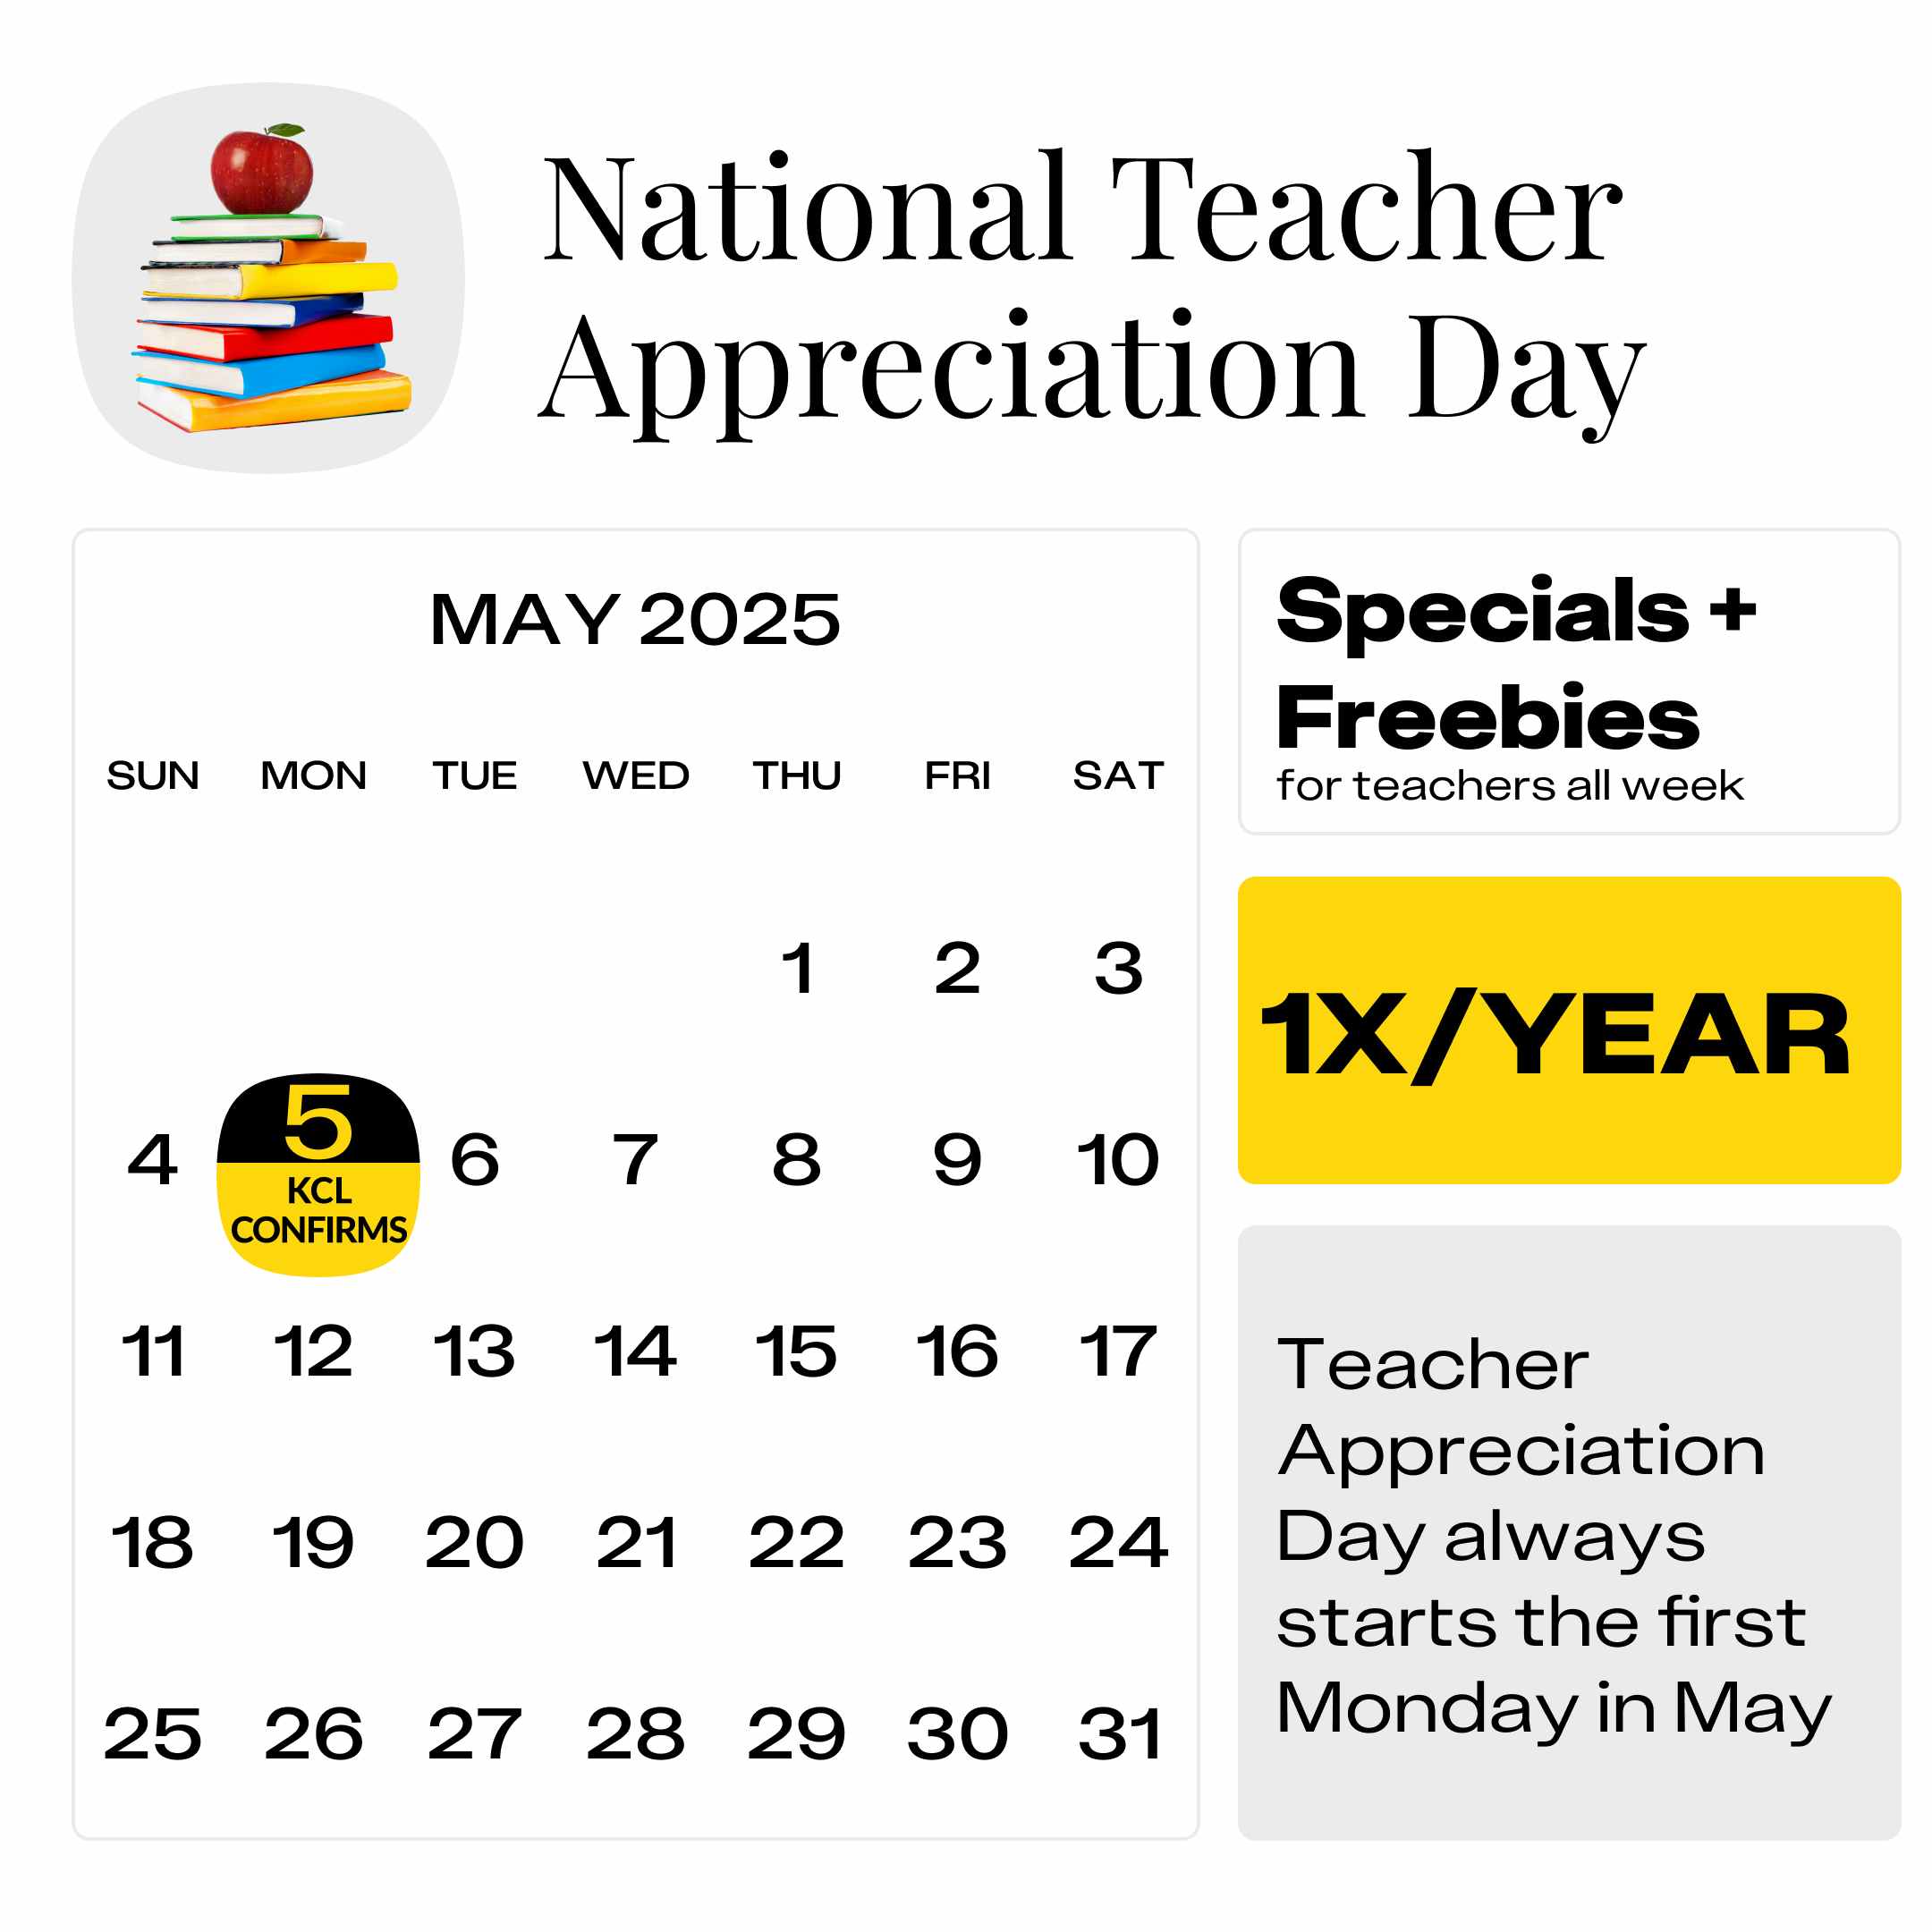 National-Teacher-Appreciation-Day-2025-confirmed